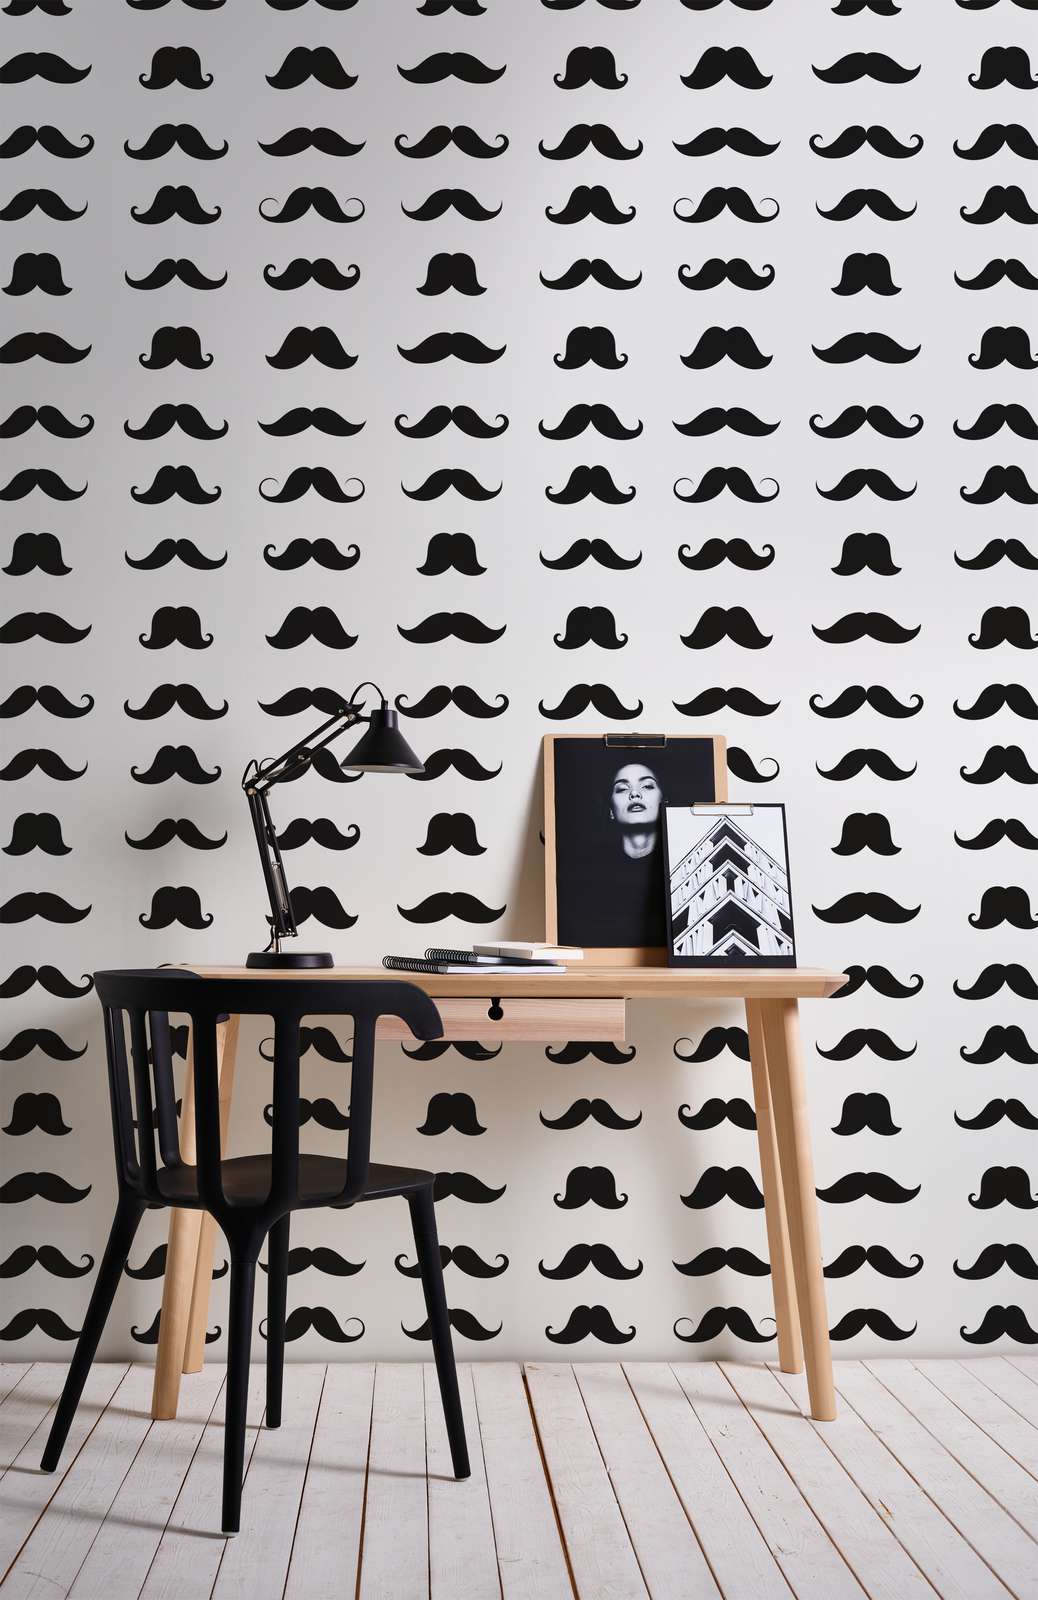             Photo wallpaper Mustache cool moustache motif - black and white - Premium smooth fleece
        